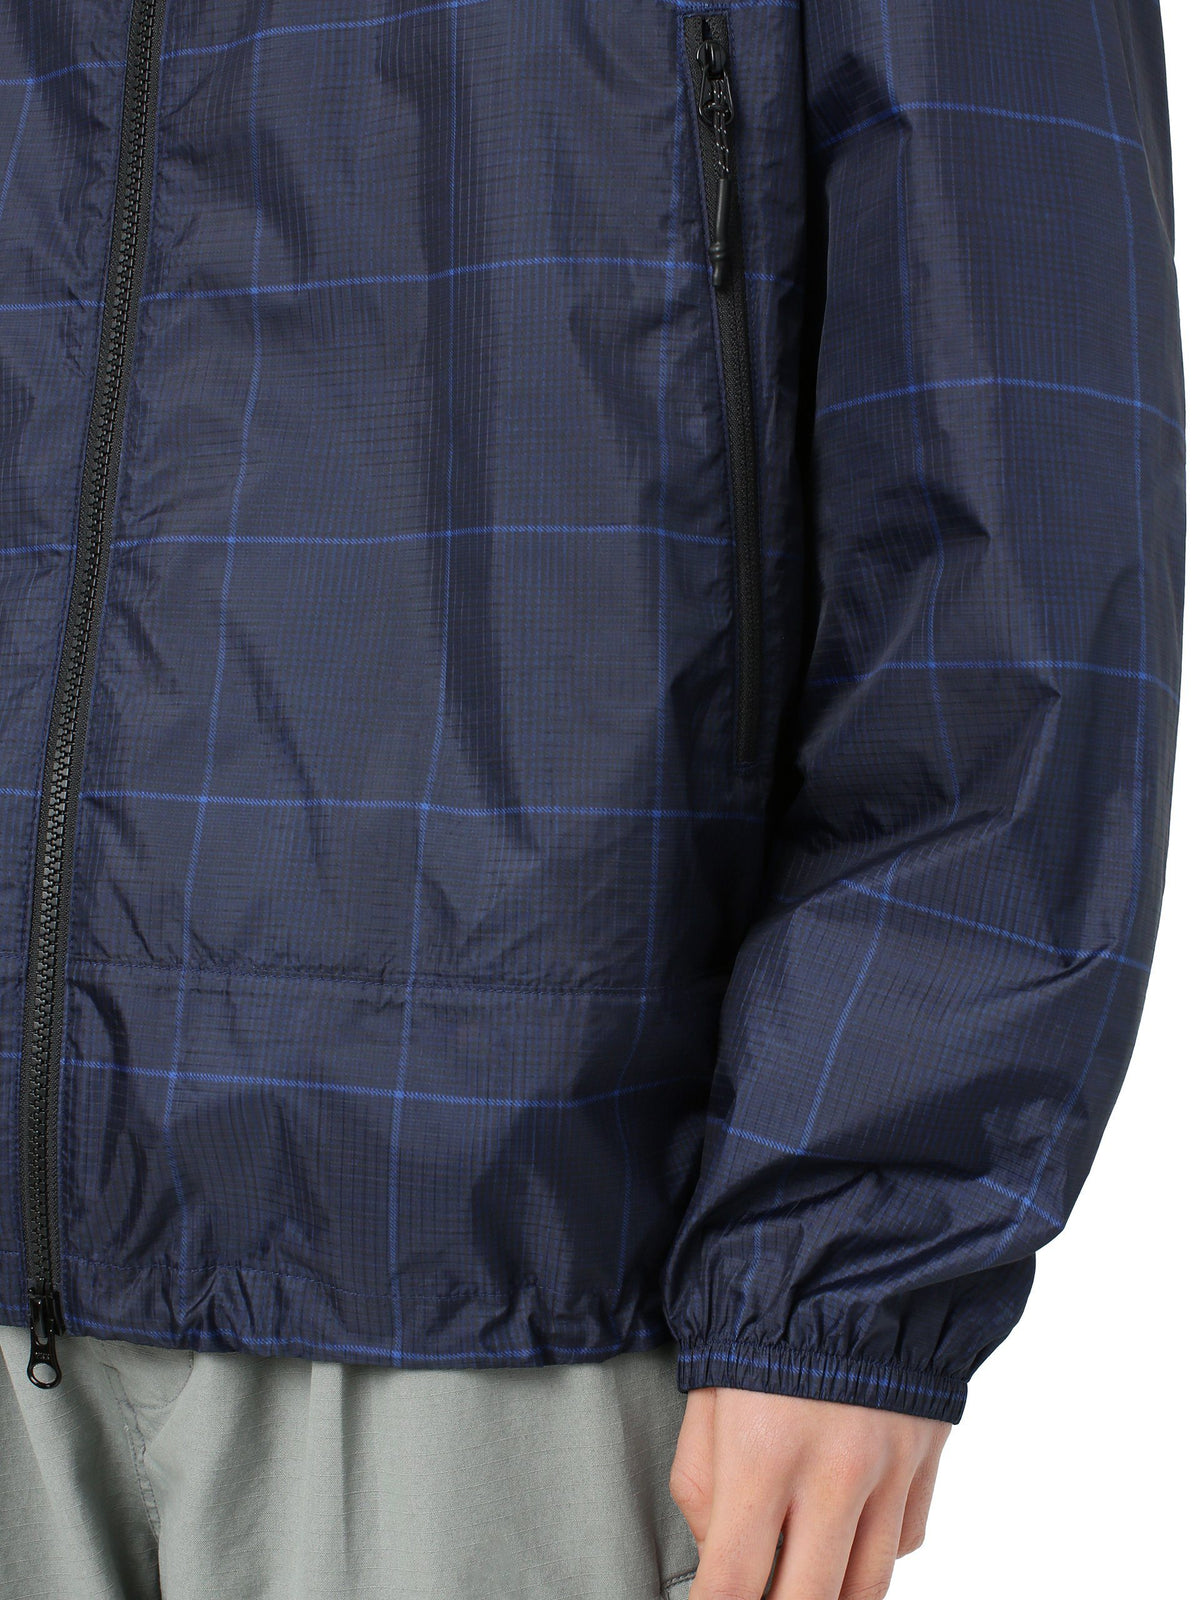 T-Light Jacket Outerwear 